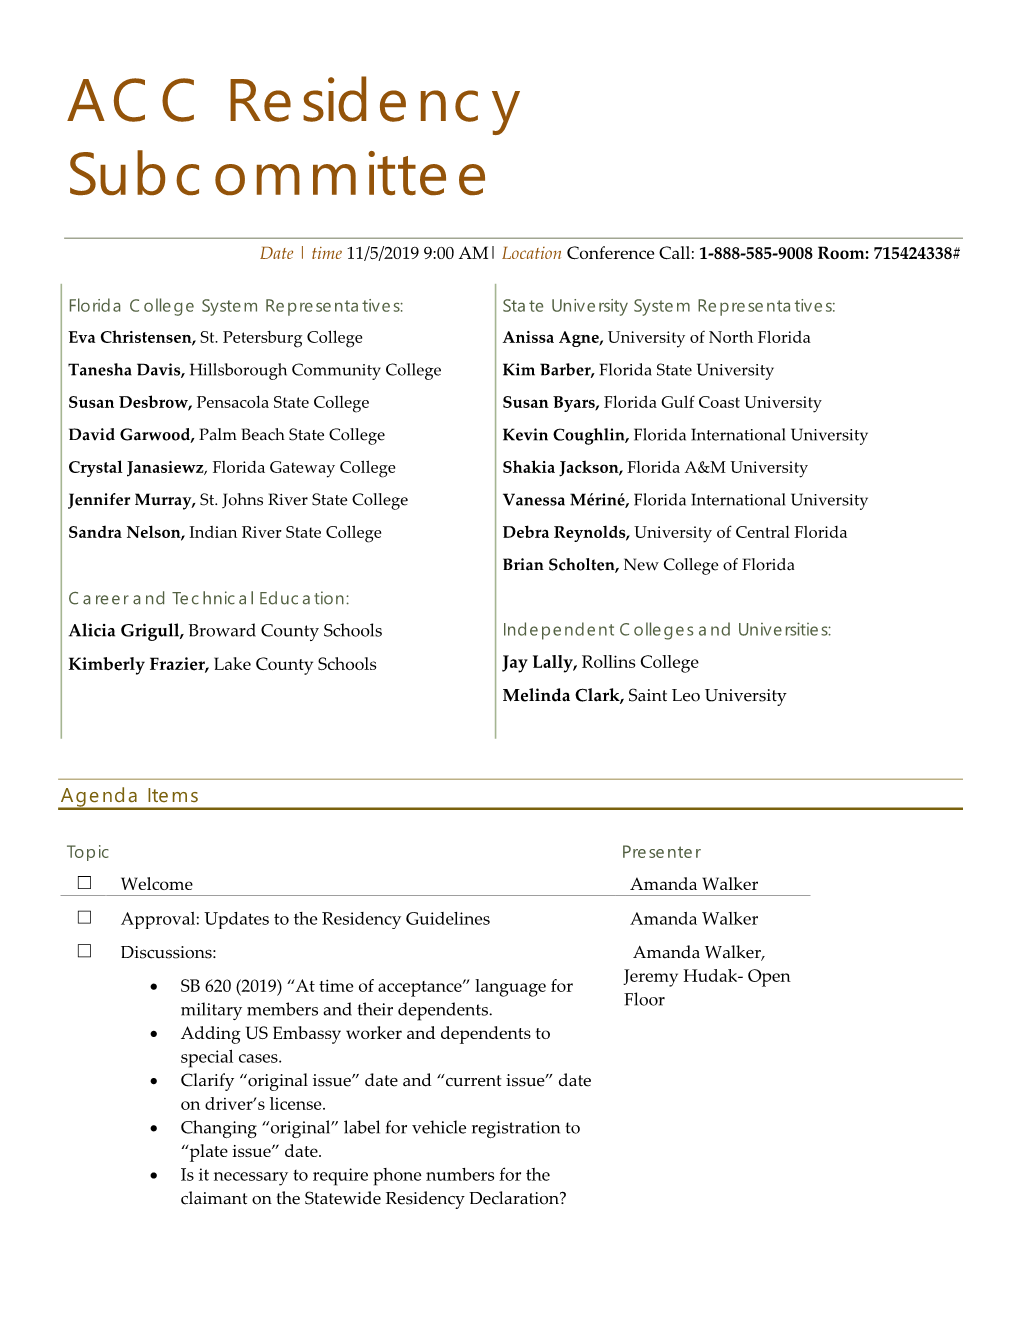 ACC Residency Subcommittee Agenda 11-5-19